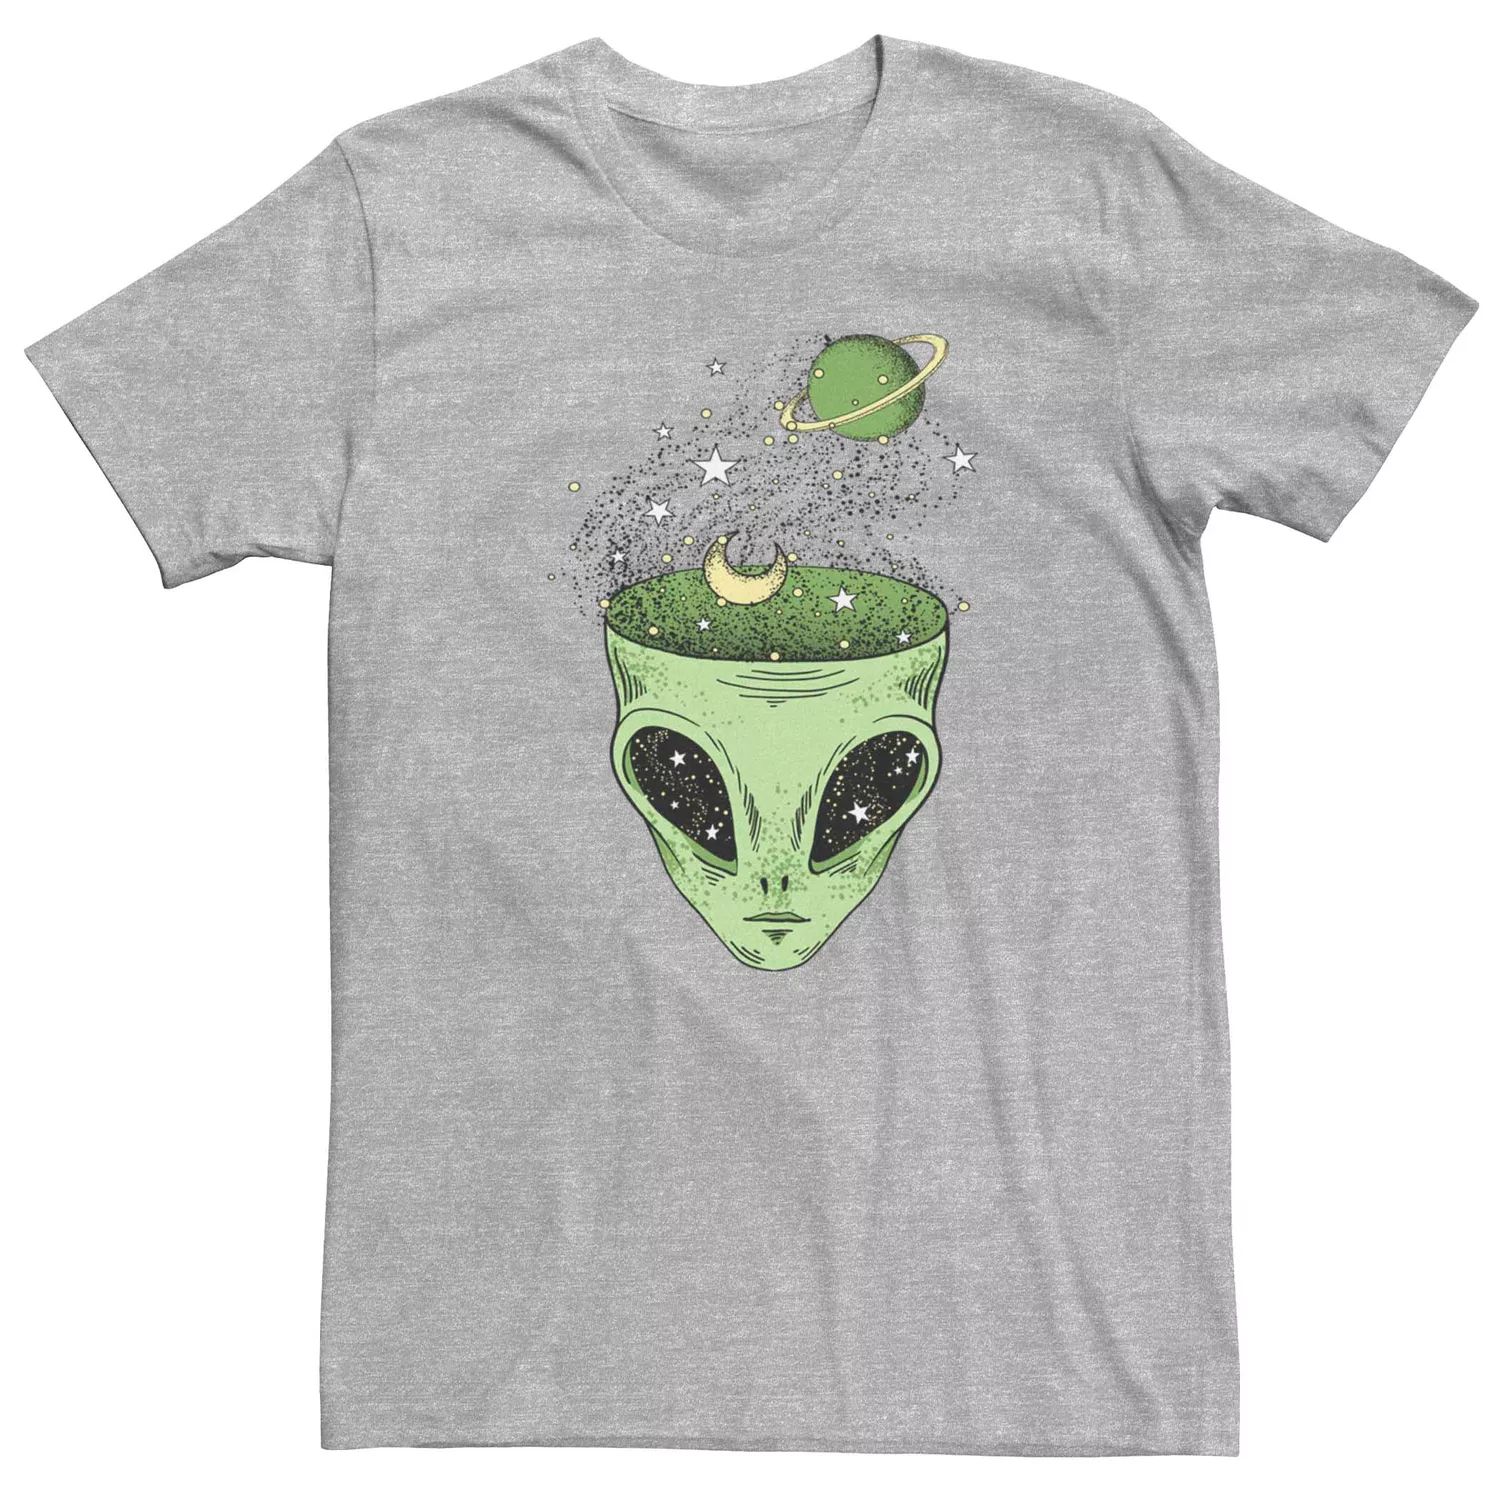 Мужская футболка с рисунком Alien Space Dreams Licensed Character